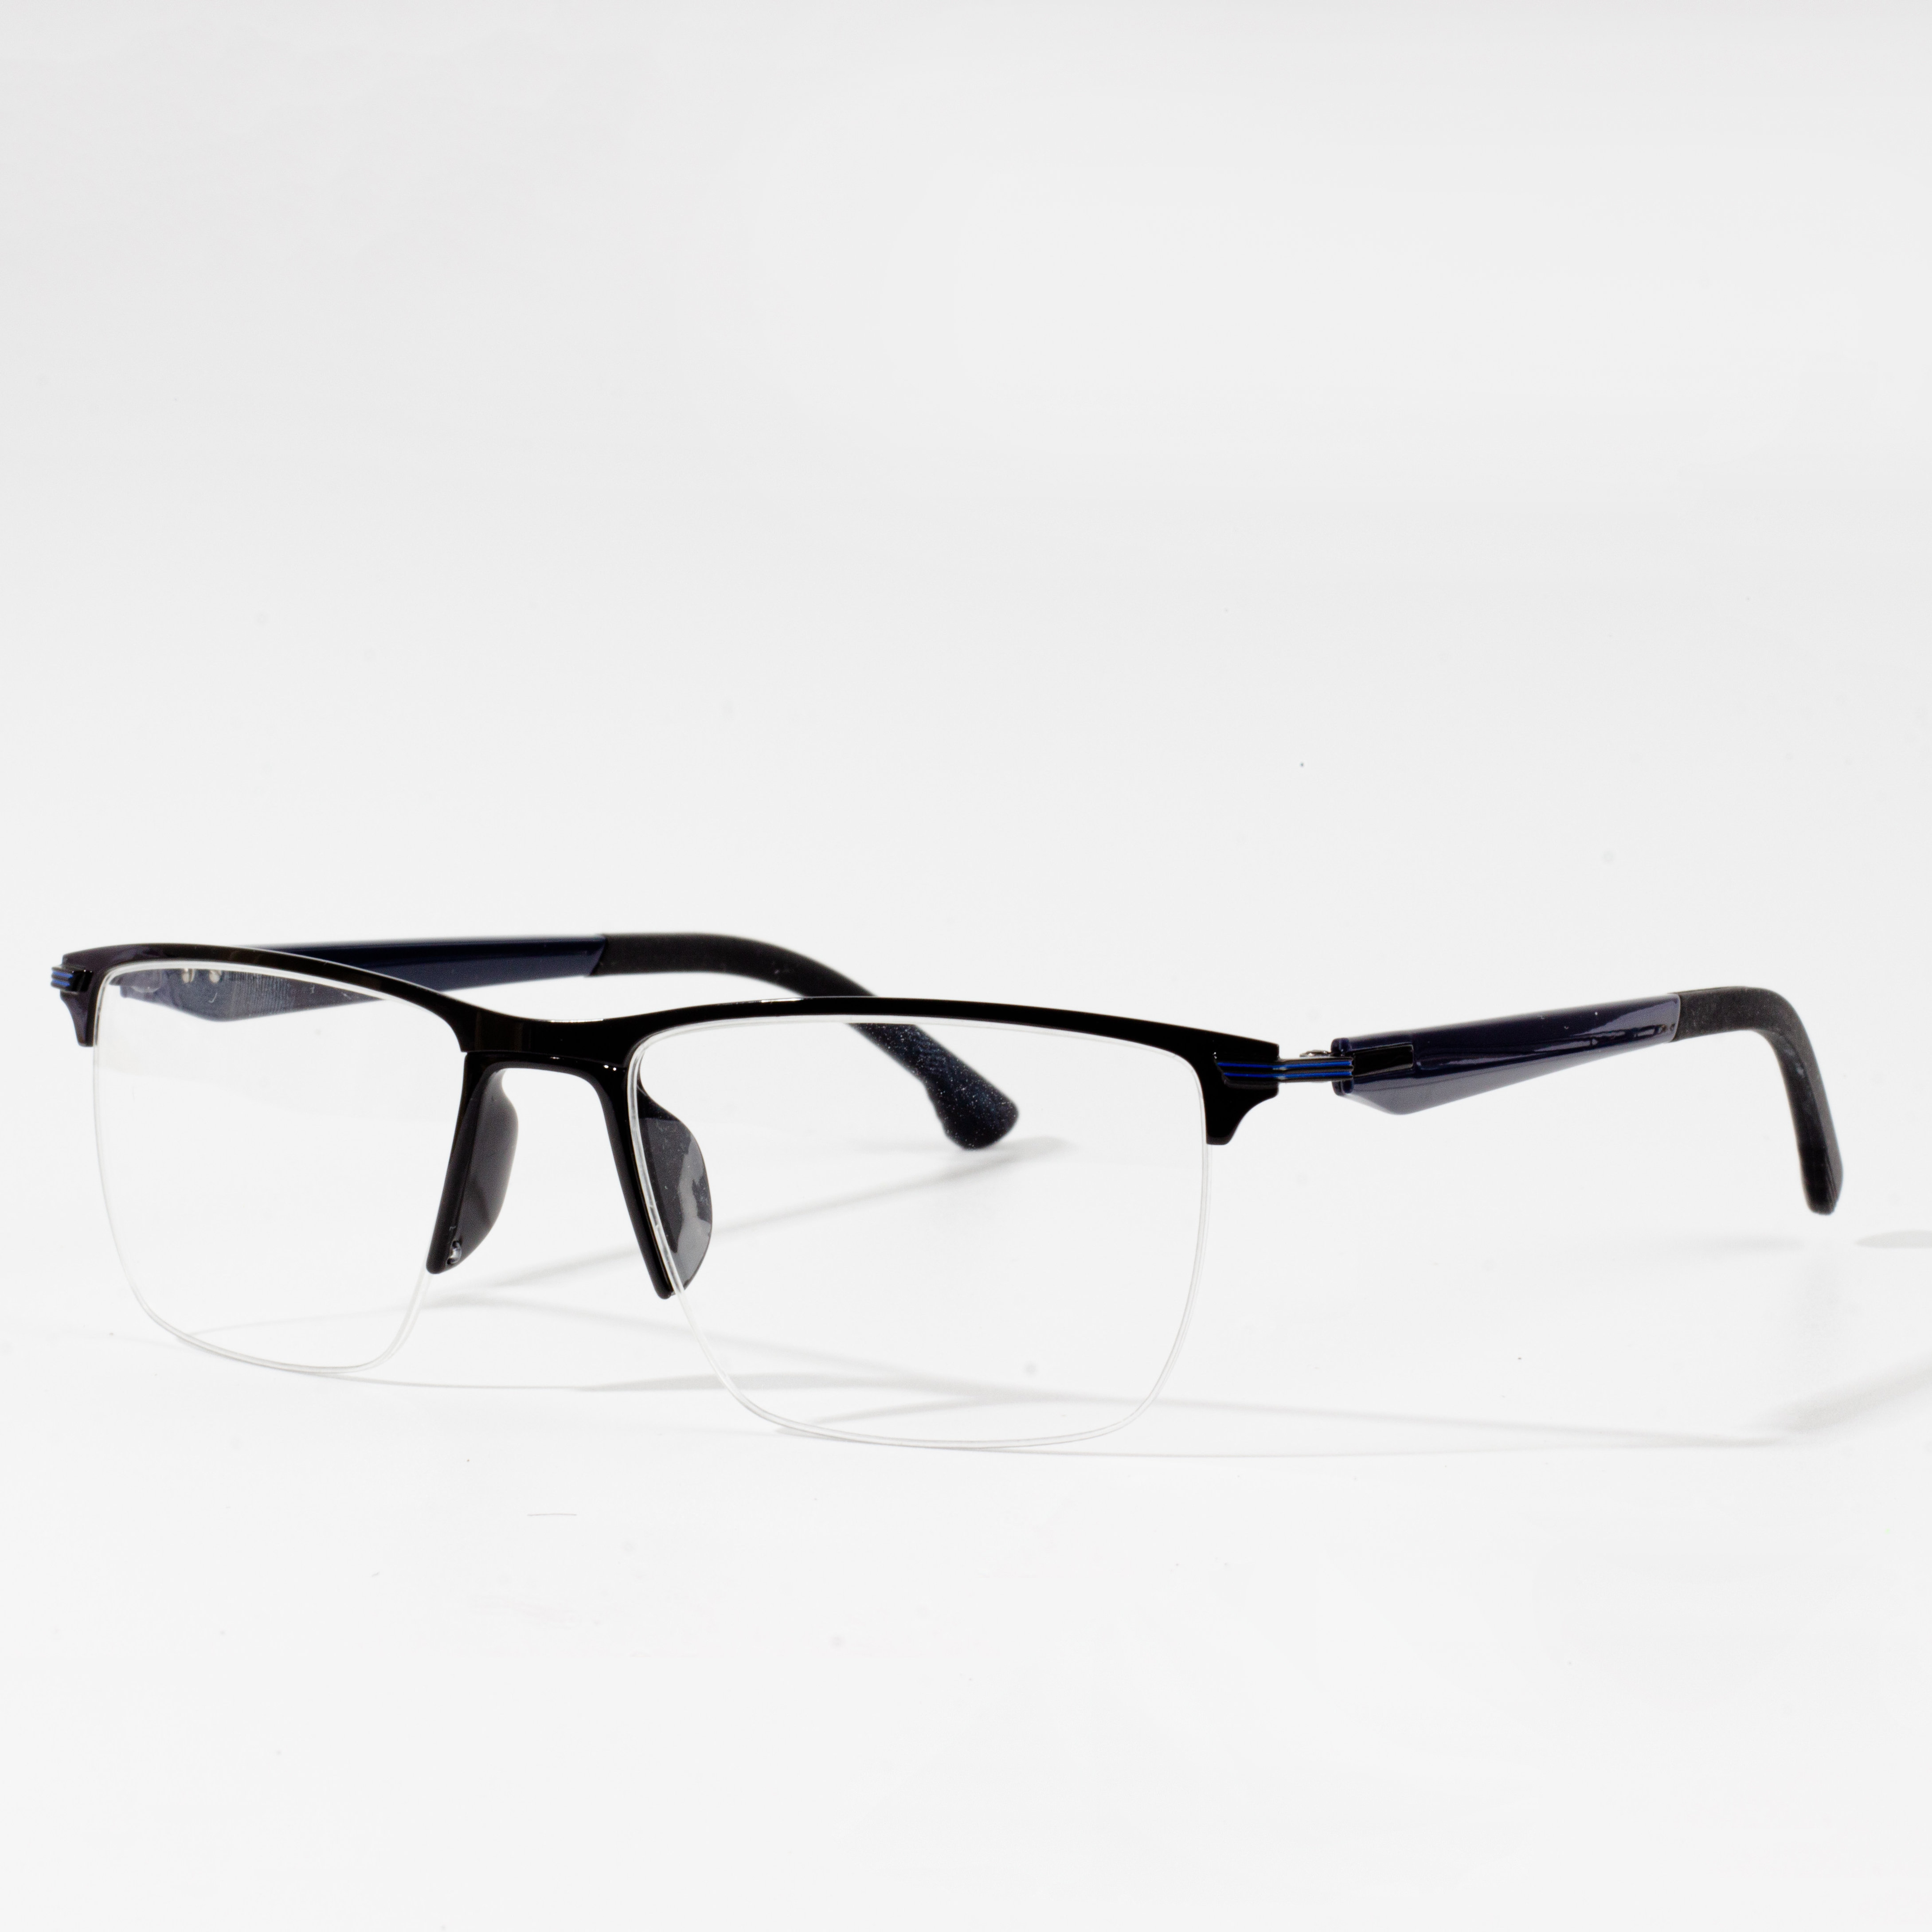 Quadratisches Brillengestell aus Metall